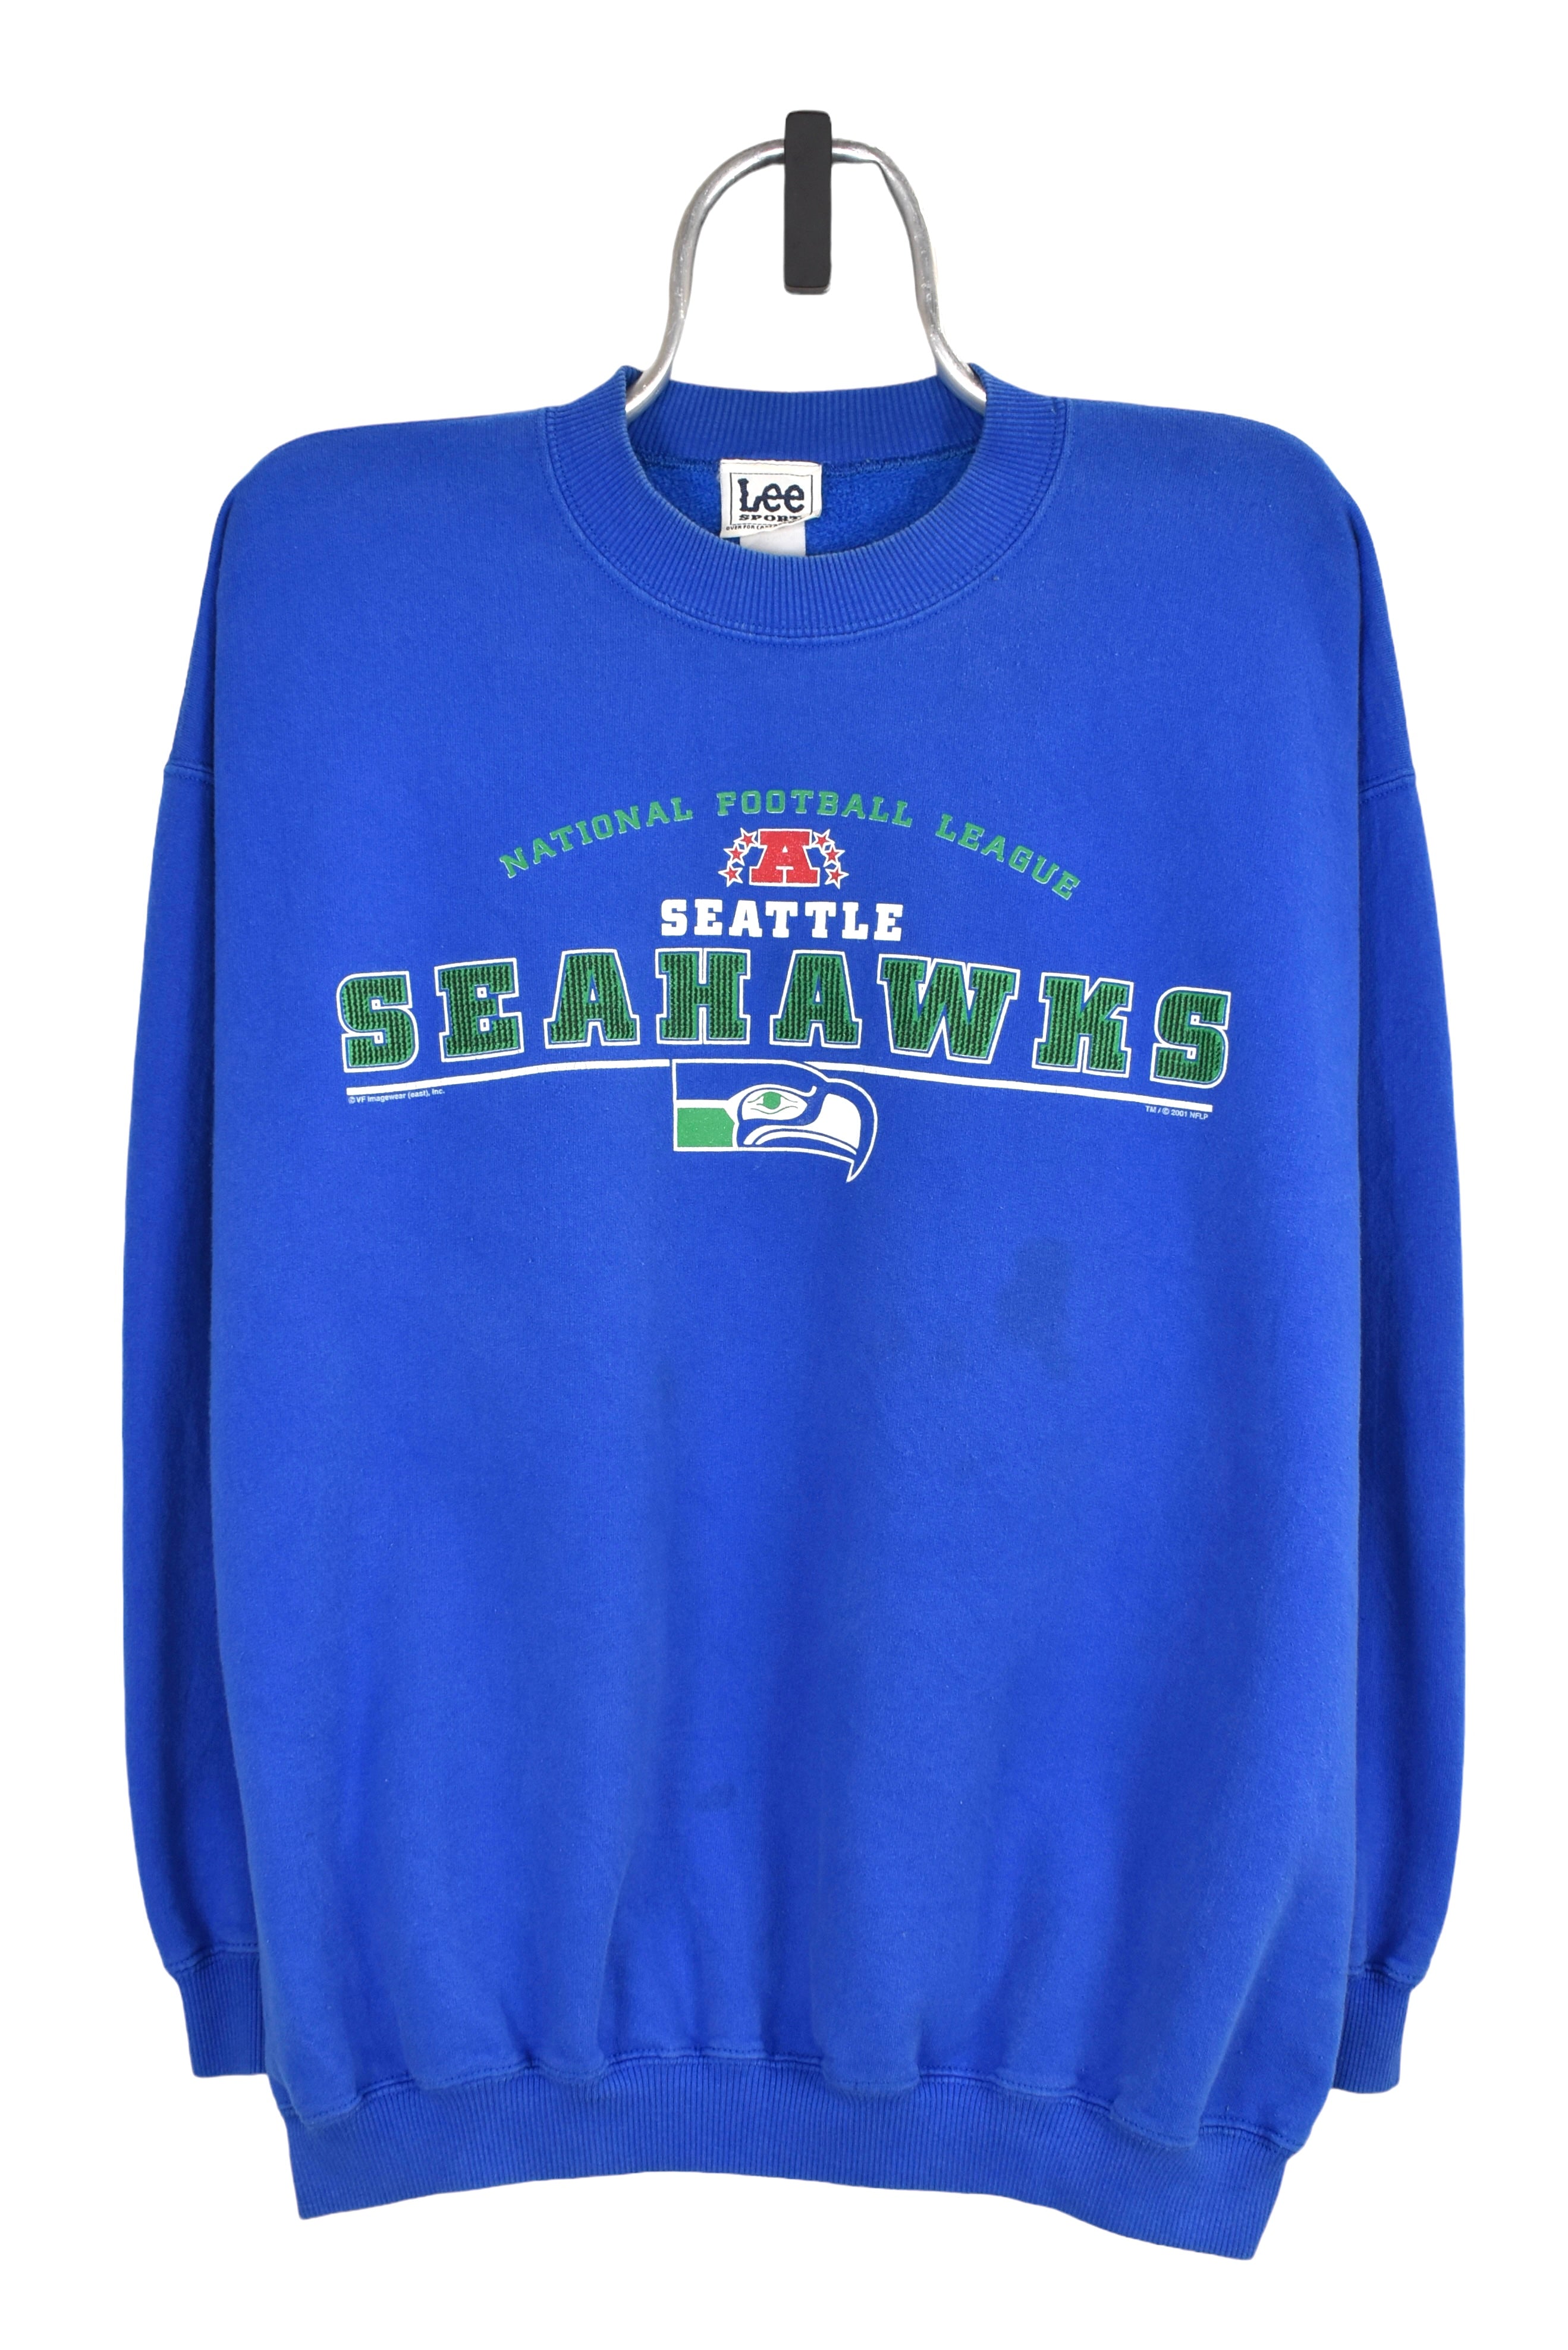 Vintage Seattle Seahawks sweatshirt (XL), blue NFL graphic crewneck